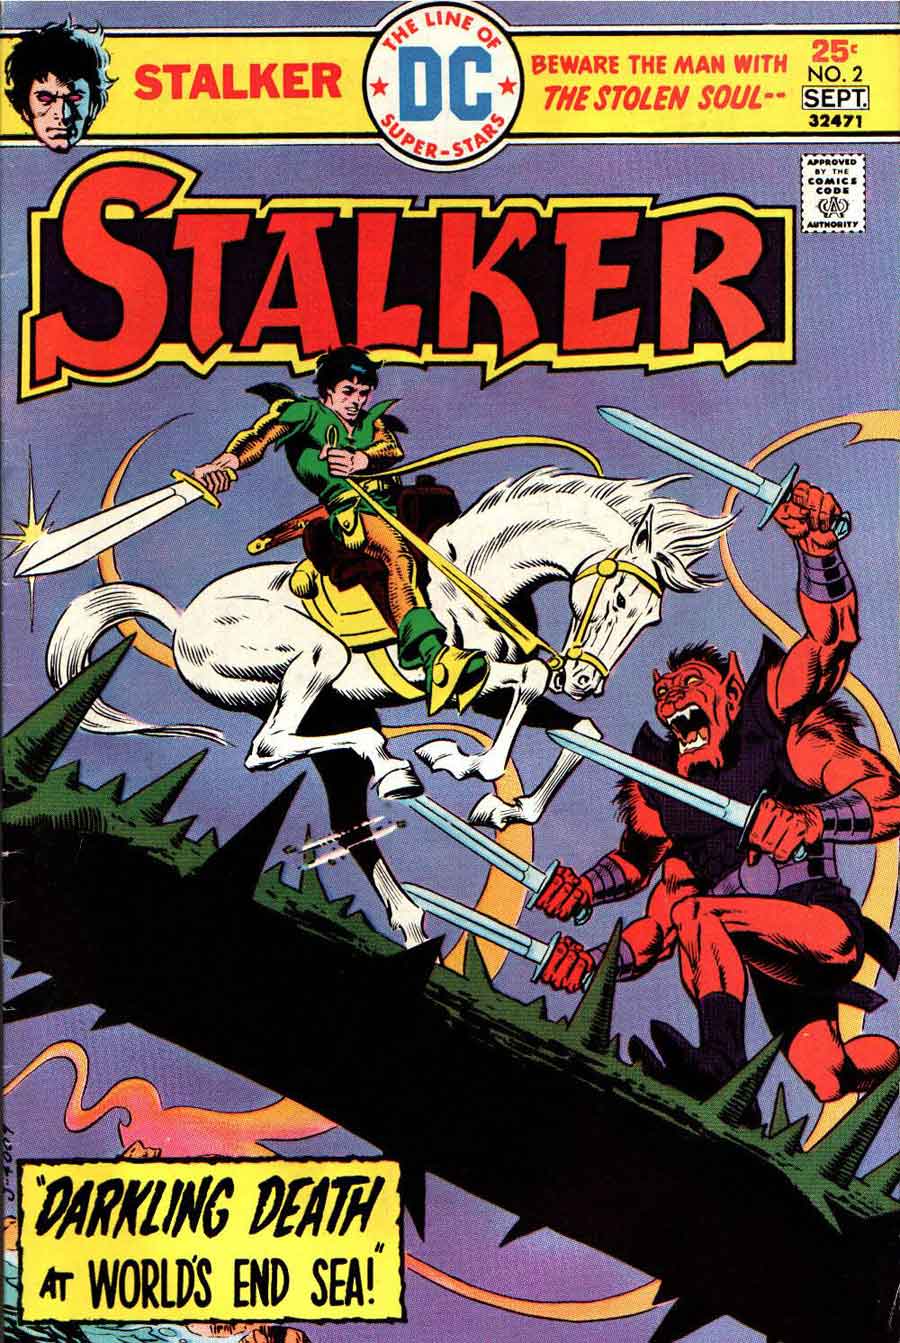 Stalker v1 #2 dc bronze age comic book cover art by Steve Ditko, Wally Wood